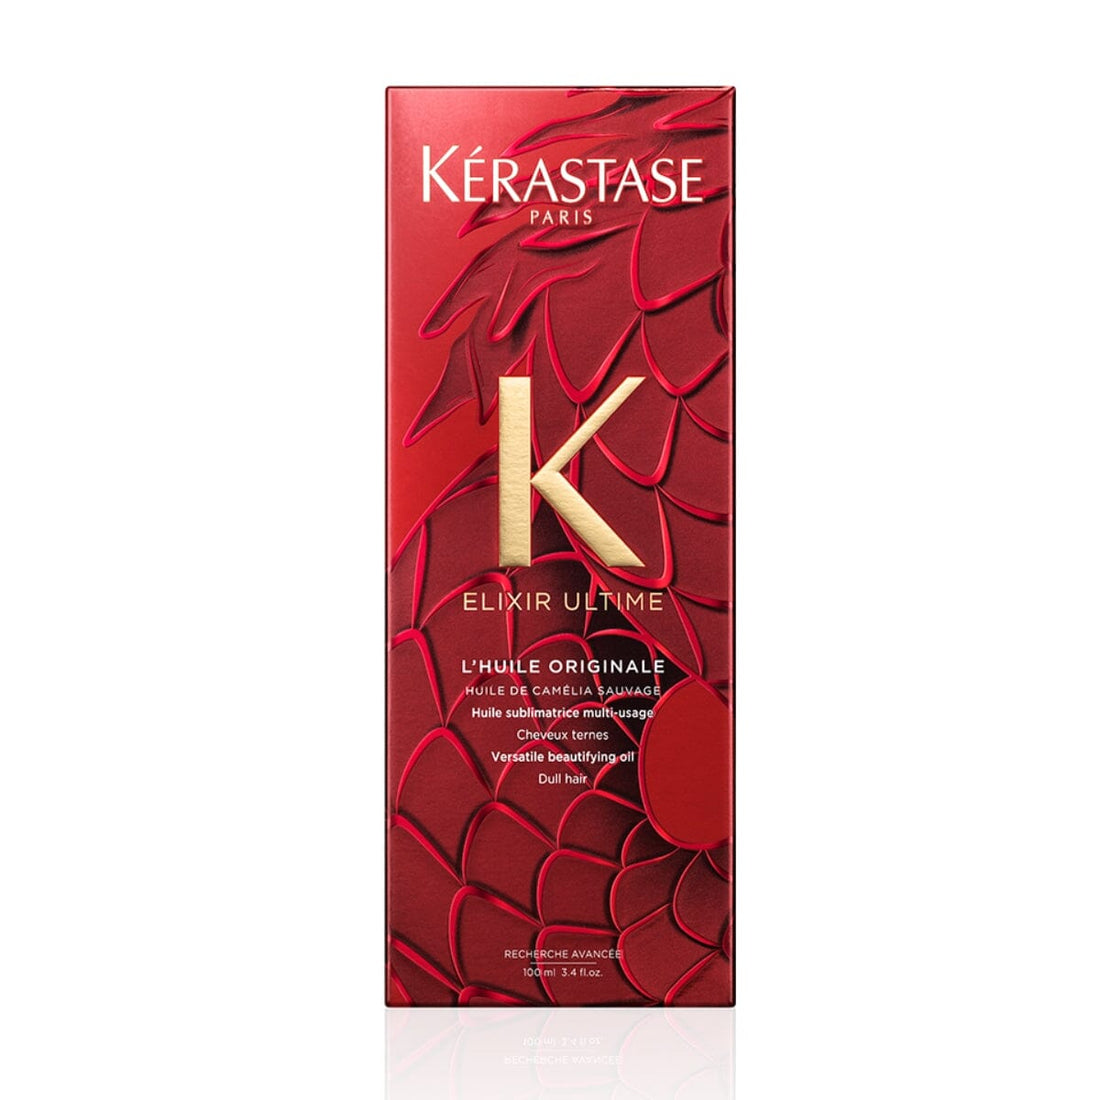 Kérastase Elixir Ultime Original Hair Oil 100ml: Limited Edition Year of the Dragon Rouge - HairMNL